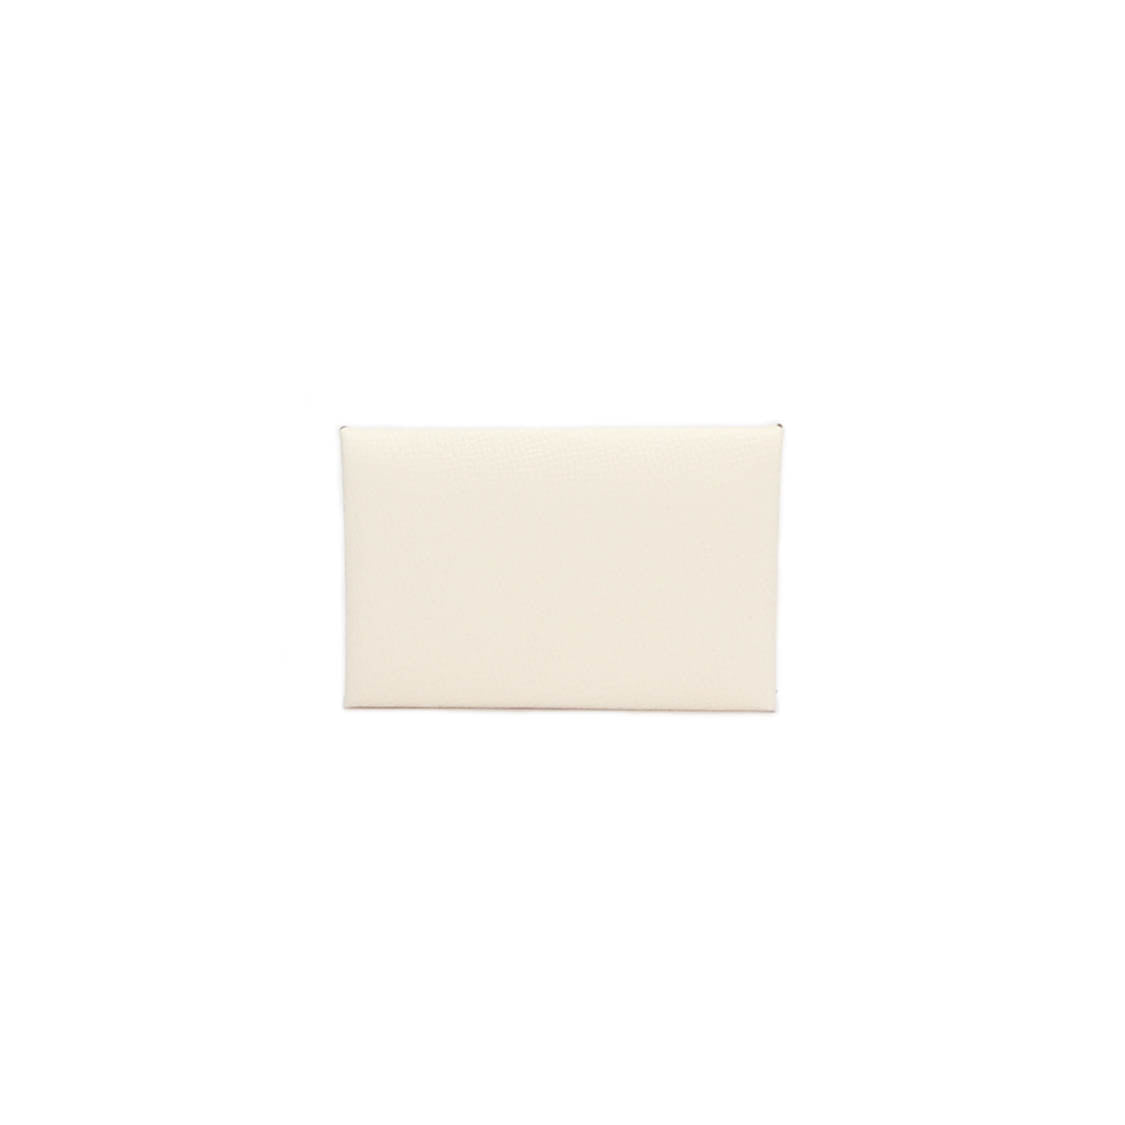 Calvi Leather Card Holder